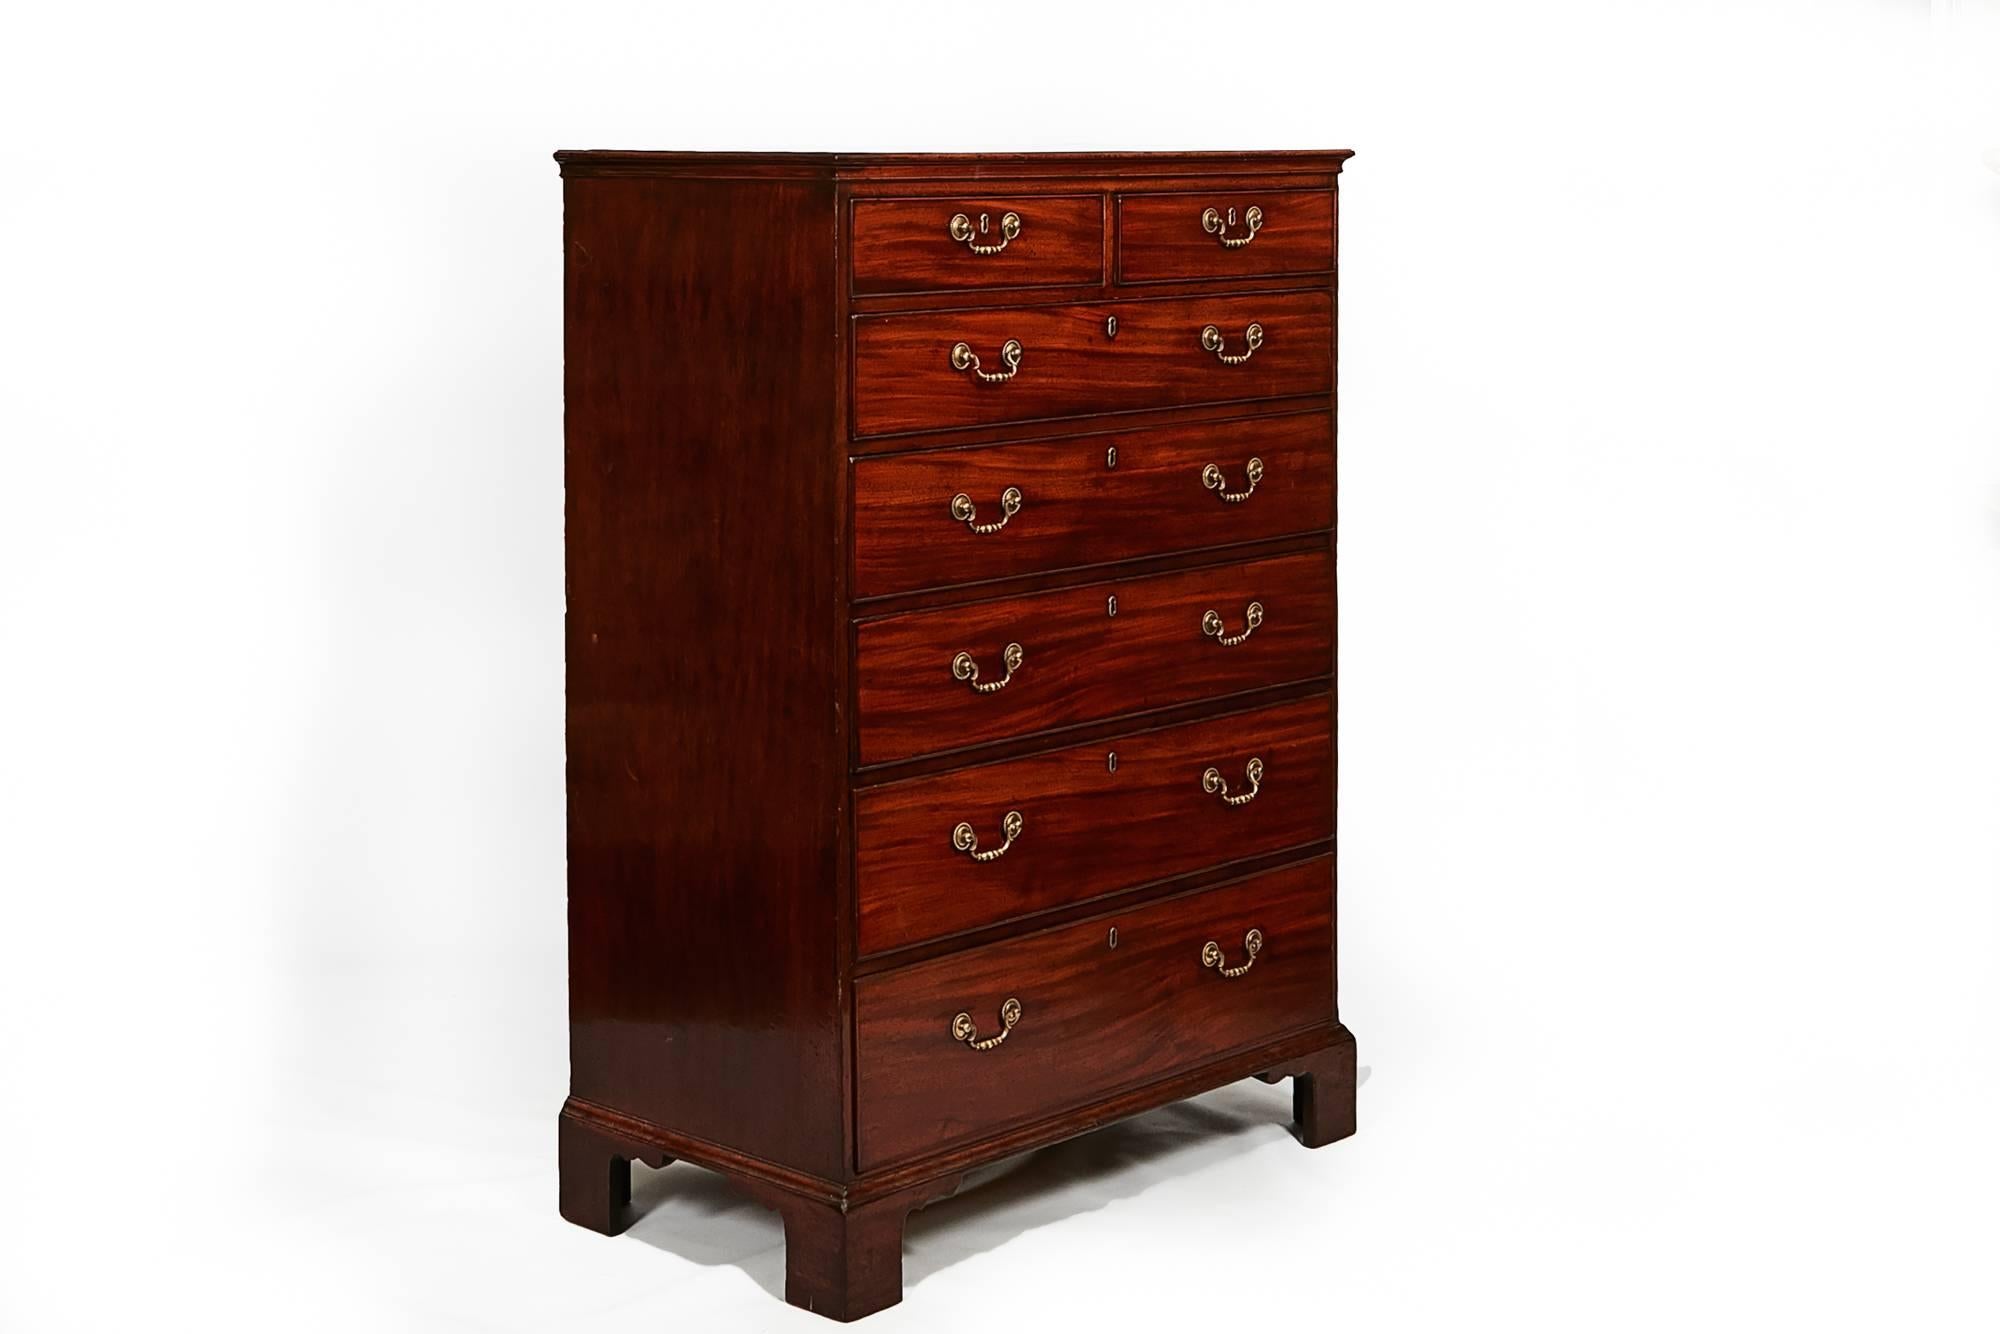 18th century Georgian Irish mahogany tallboy, two short drawers above five graduated drawers terminating on bracket feet.